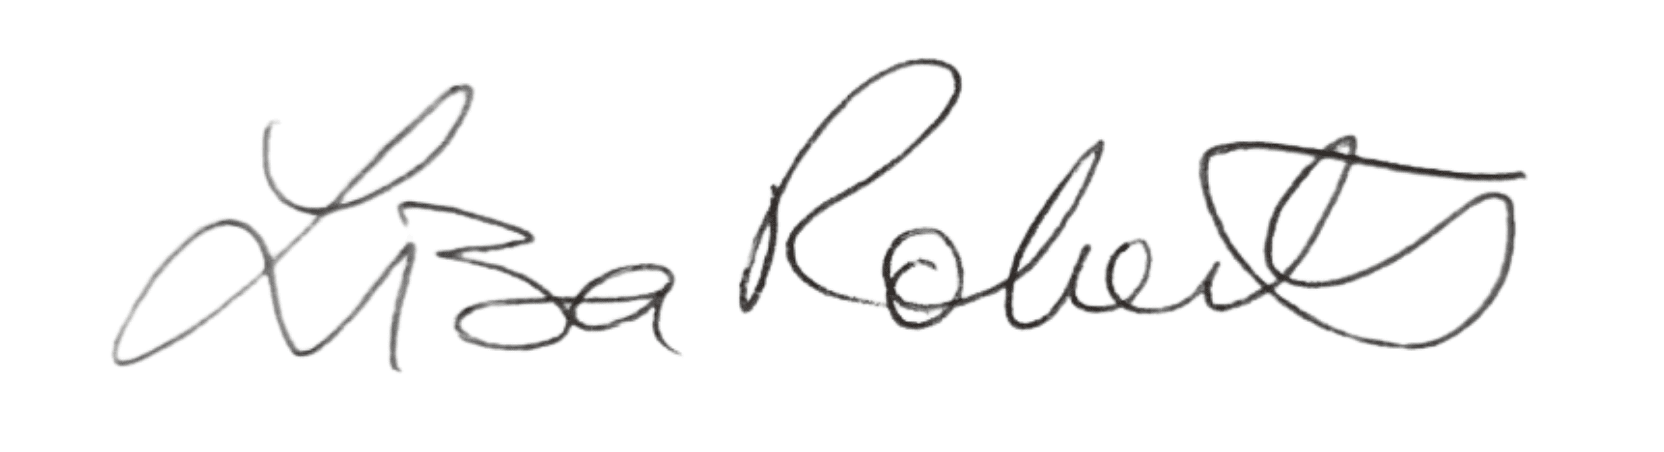 Lisa Roberts signature